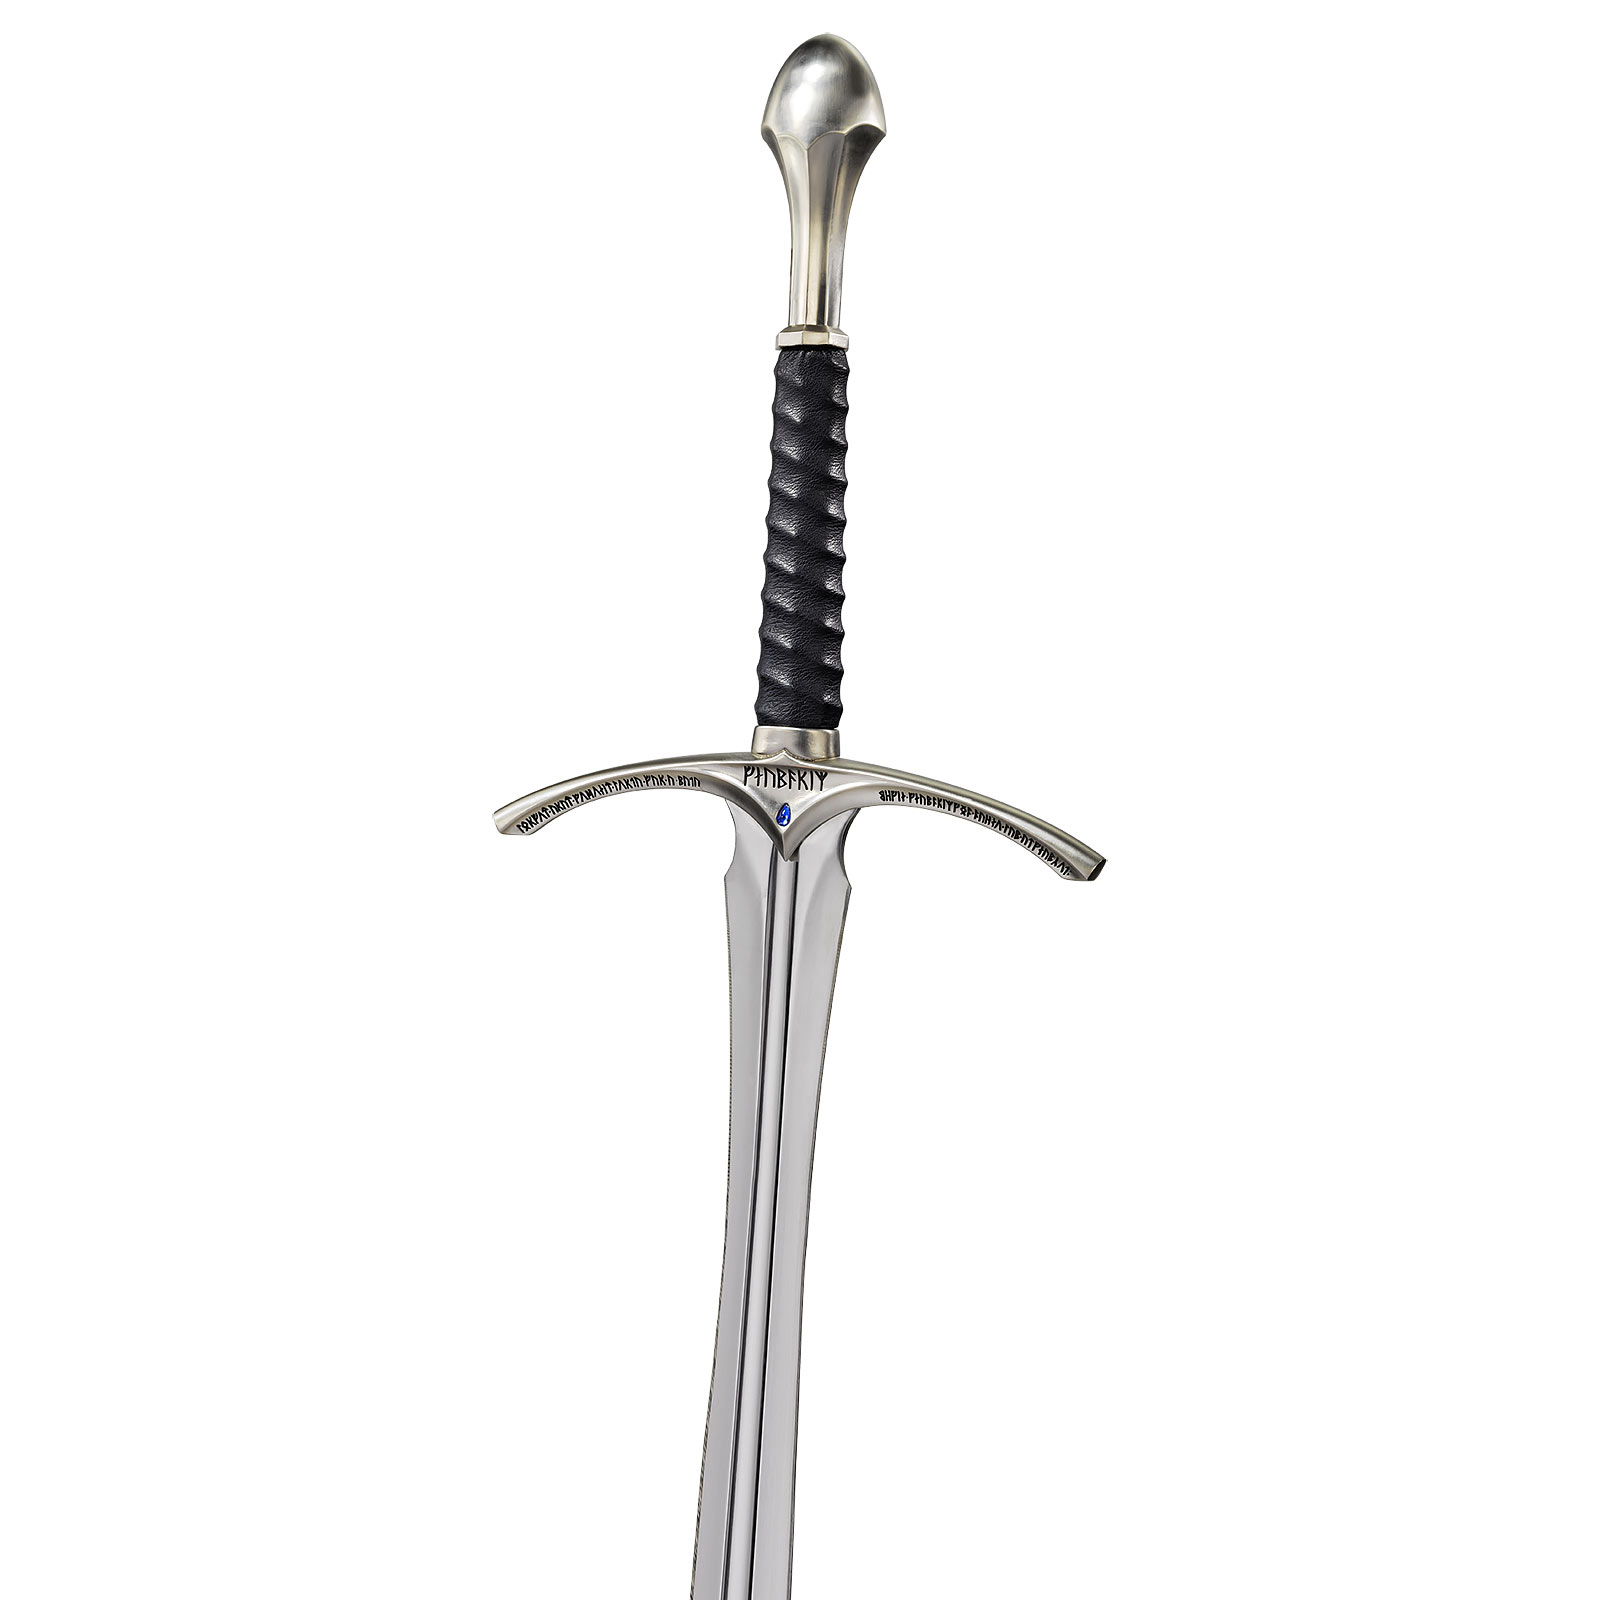 The Hobbit - Gandalf's Sword Glamdring